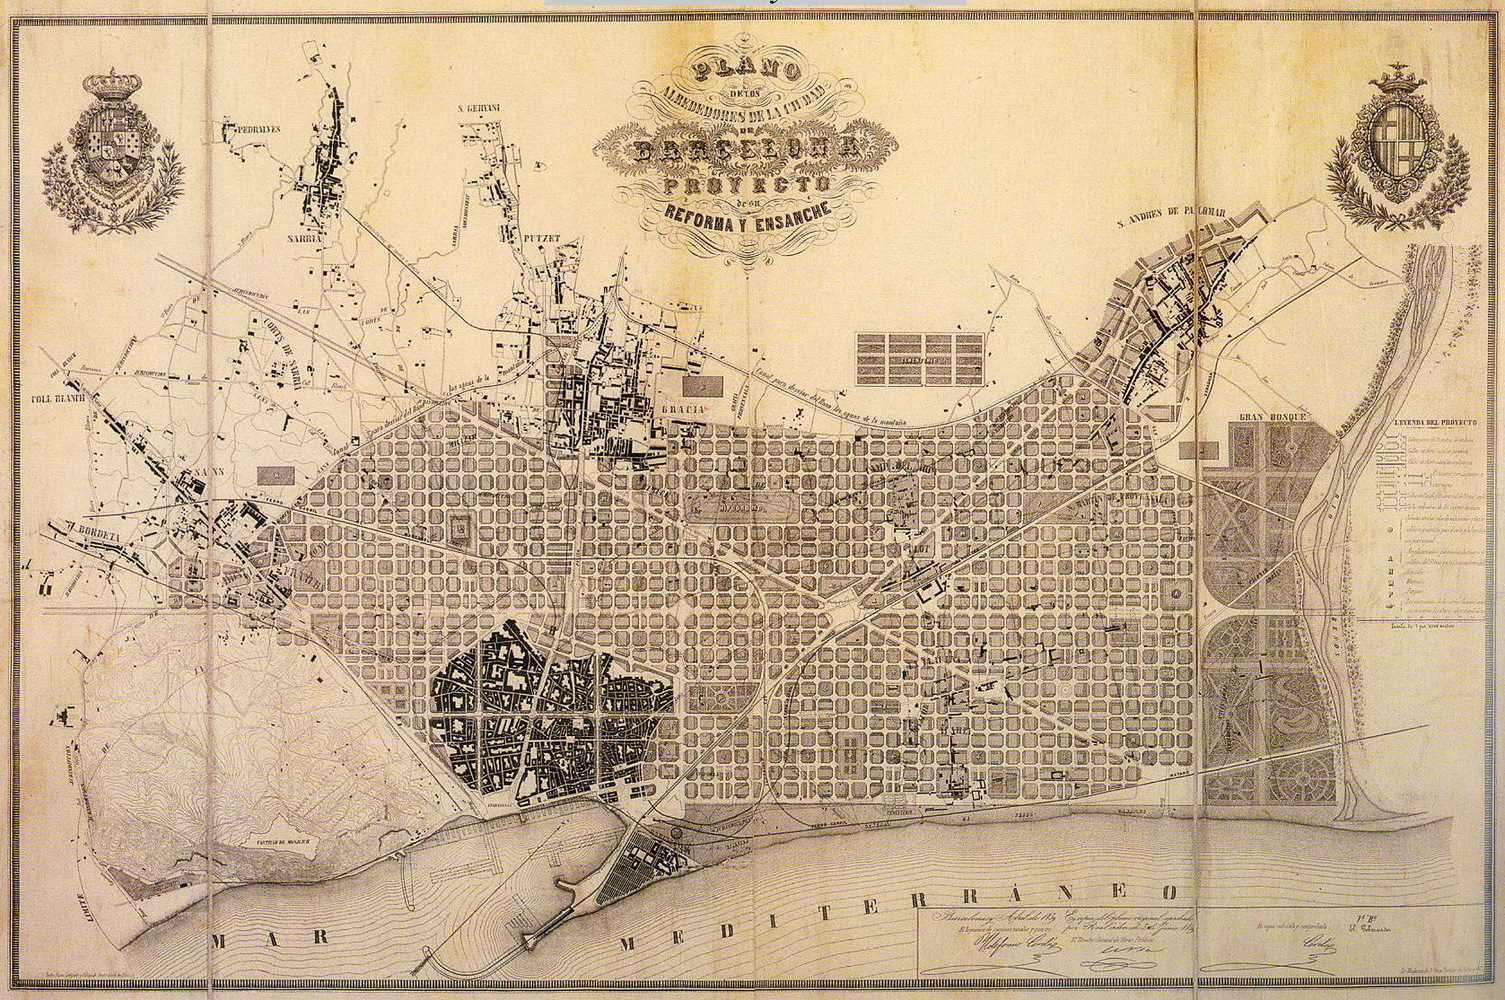 Plano Cerdà (1858) Imagem Ildefons Cerdà i Sunyer - Museu d'Historia de la Ciutat, Barcelona (Imagem de domínio público)